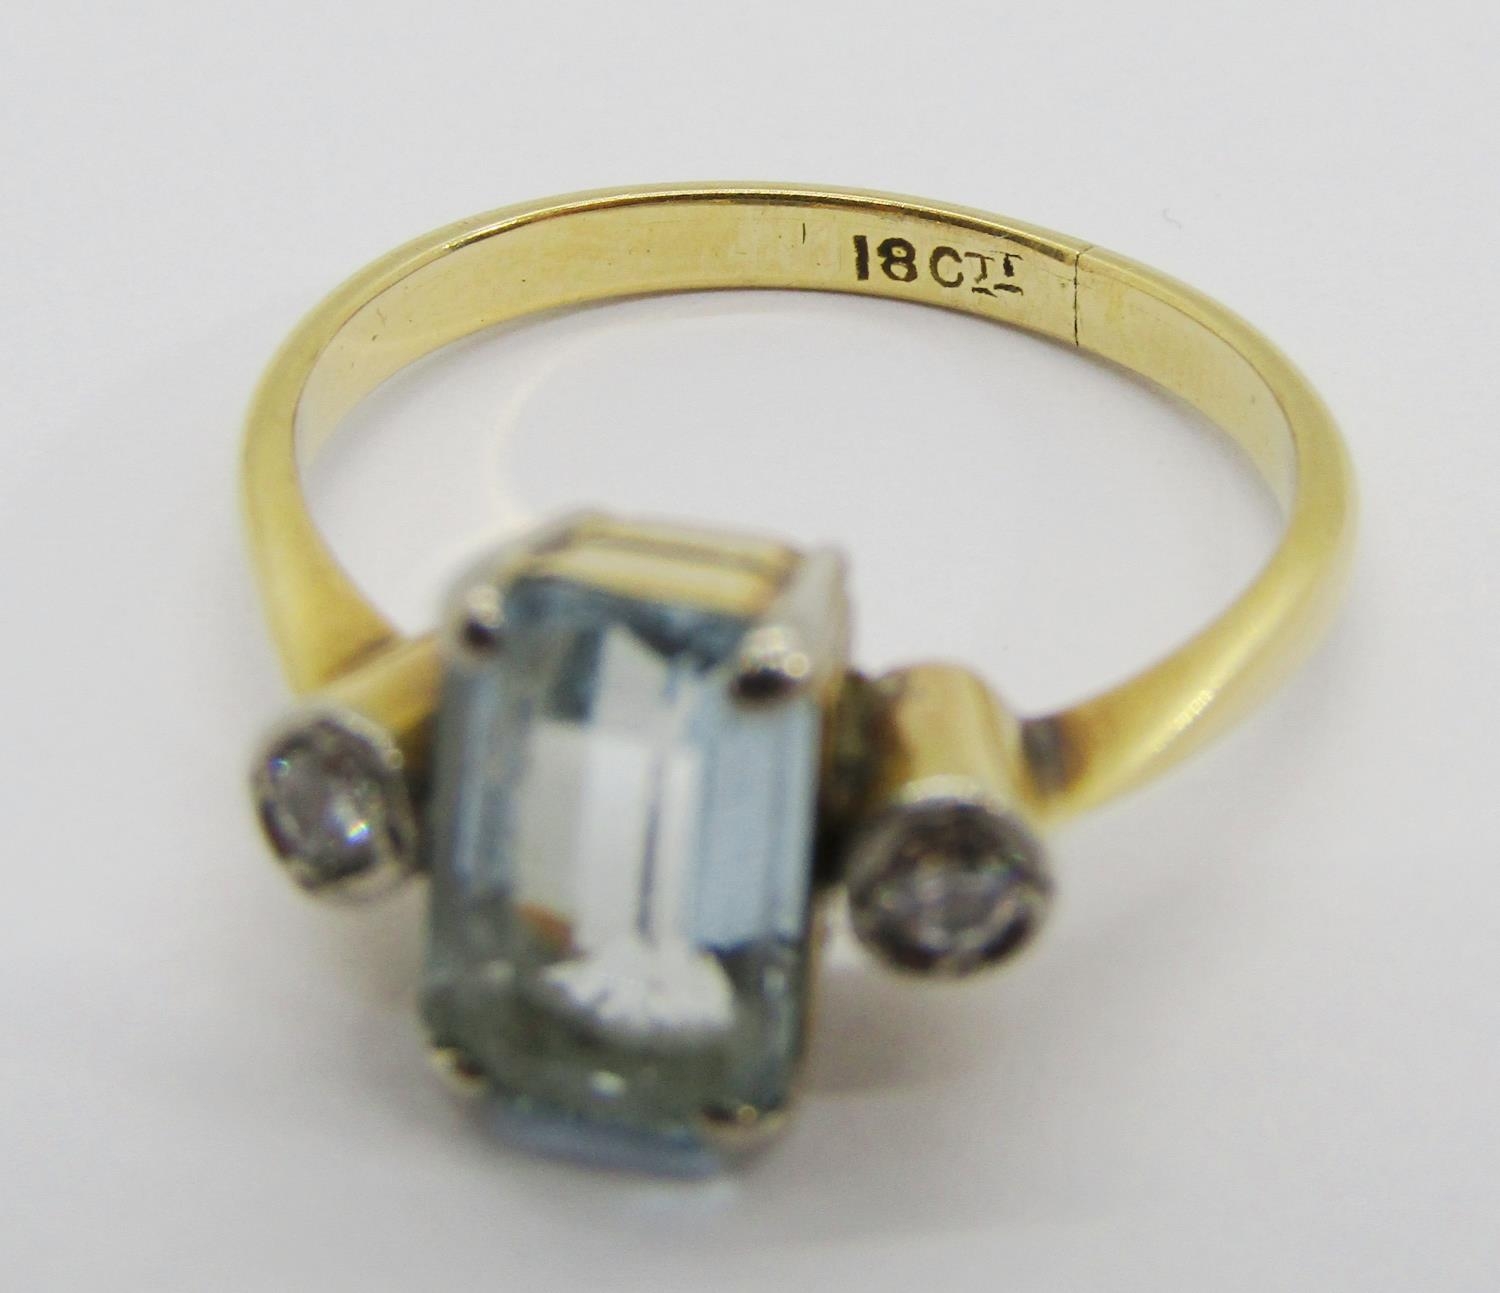 Early 20th century 18ct emerald-cut aquamarine and diamond three stone ring, size J, 3.4g - Image 4 of 5